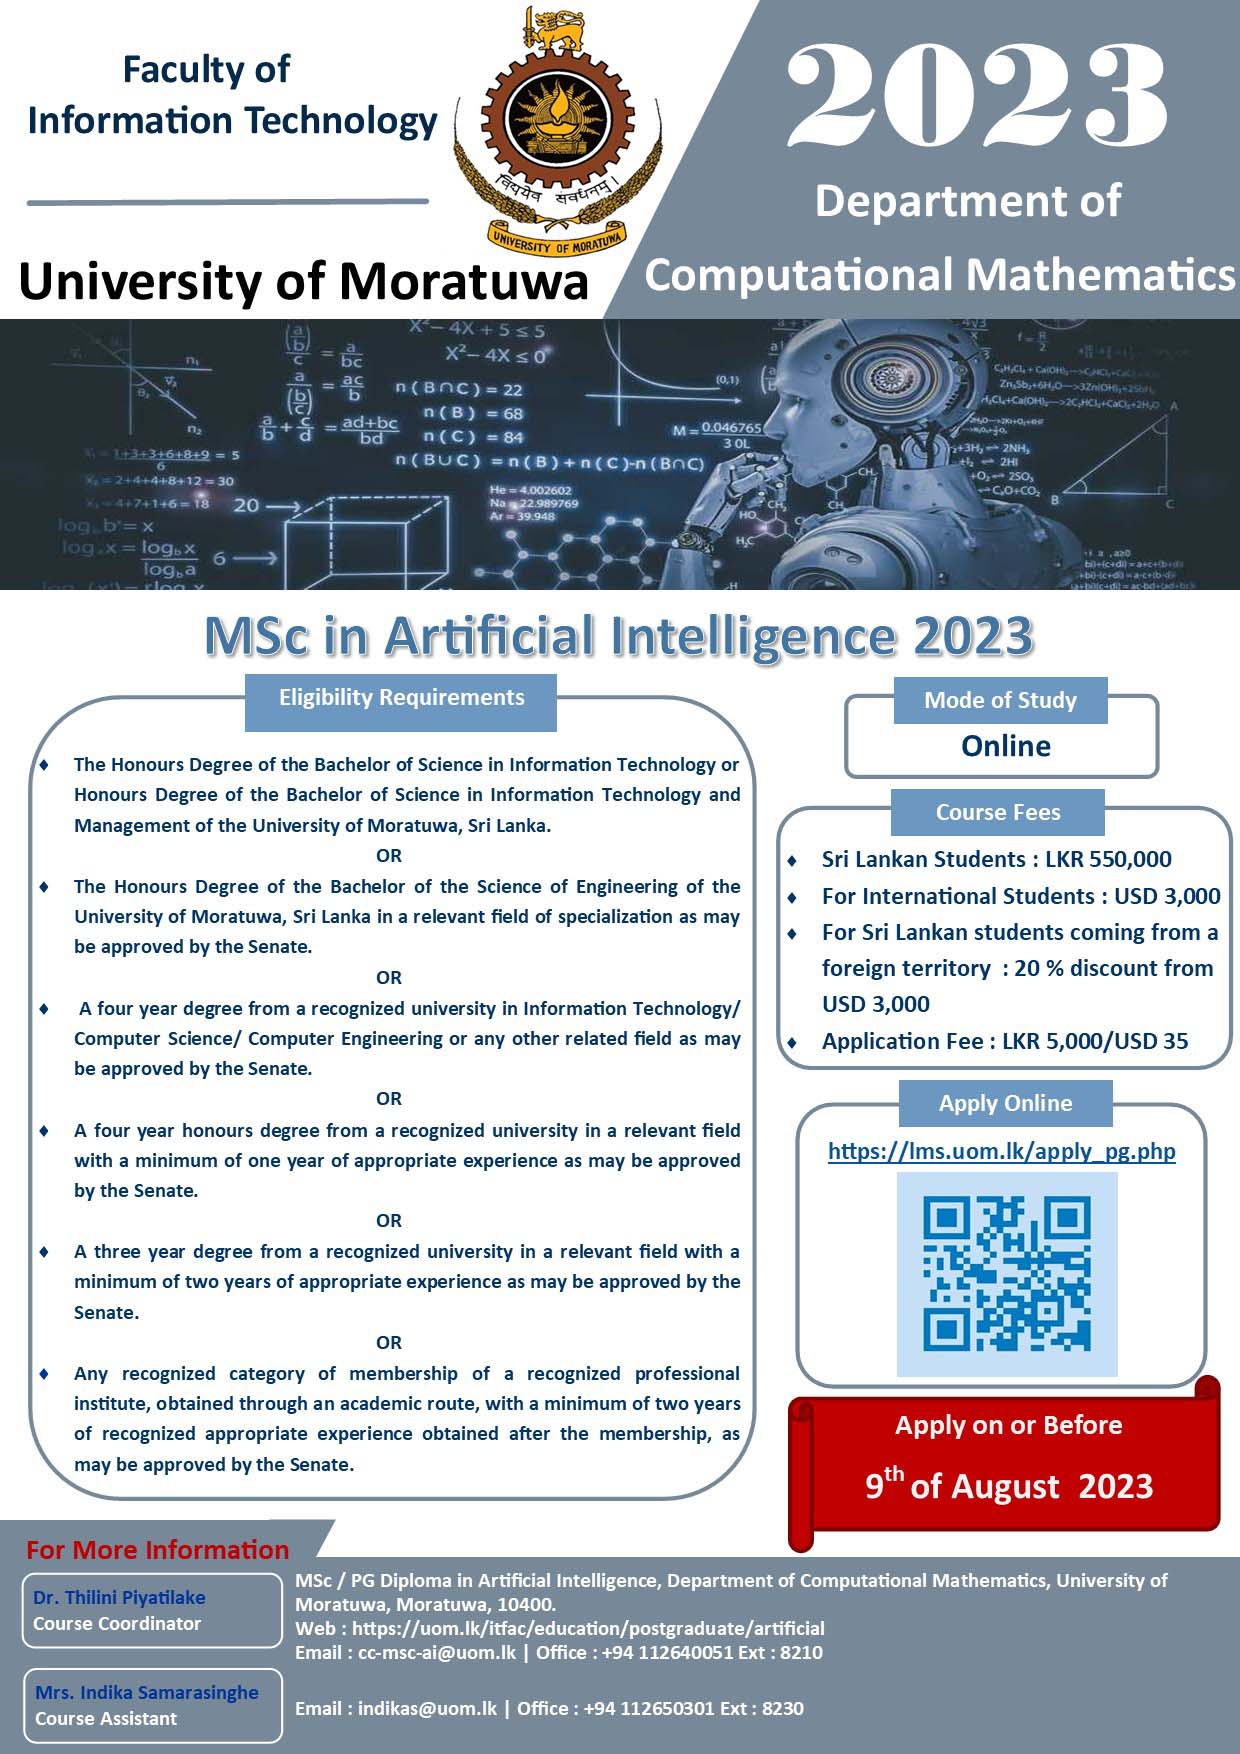 MSc / PGDip in Artificial Intelligence (AI) 2023 - University of Moratuwa